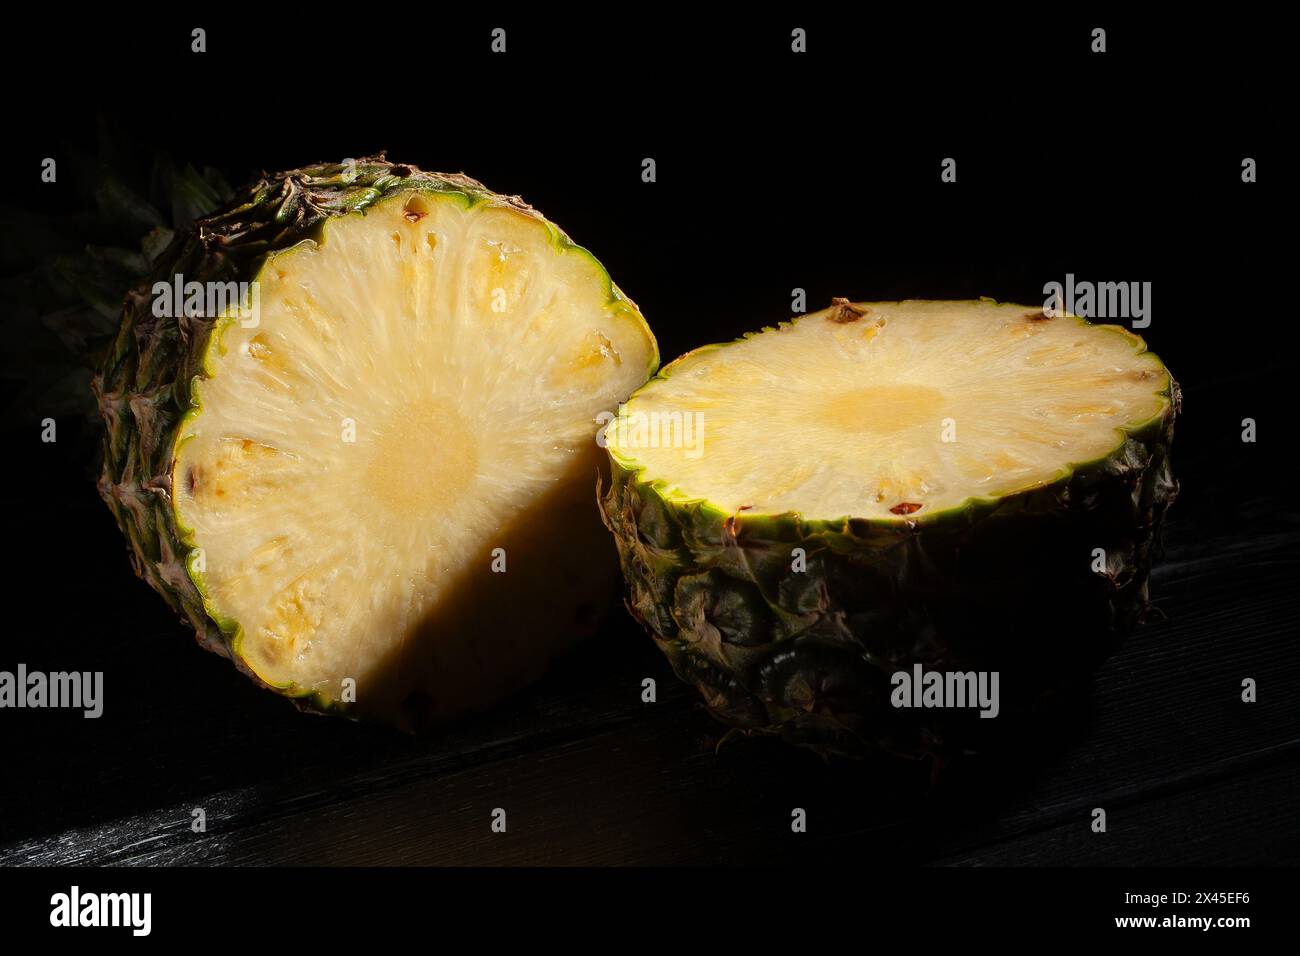 sliced pineapple on black wood background Stock Photo